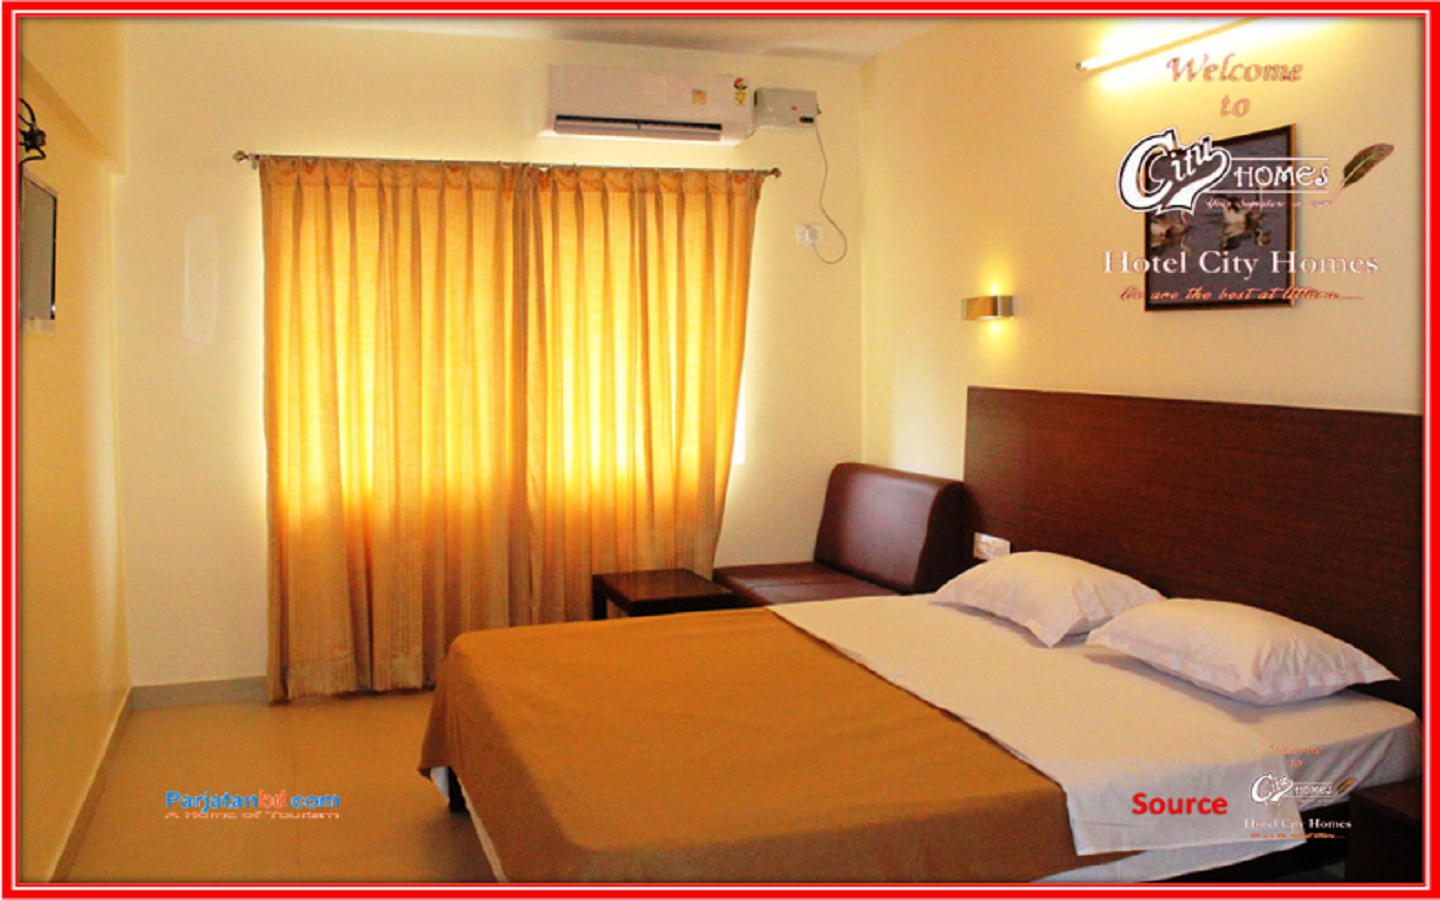 Room Family Suite -1, City Homes Hotel, Uttara